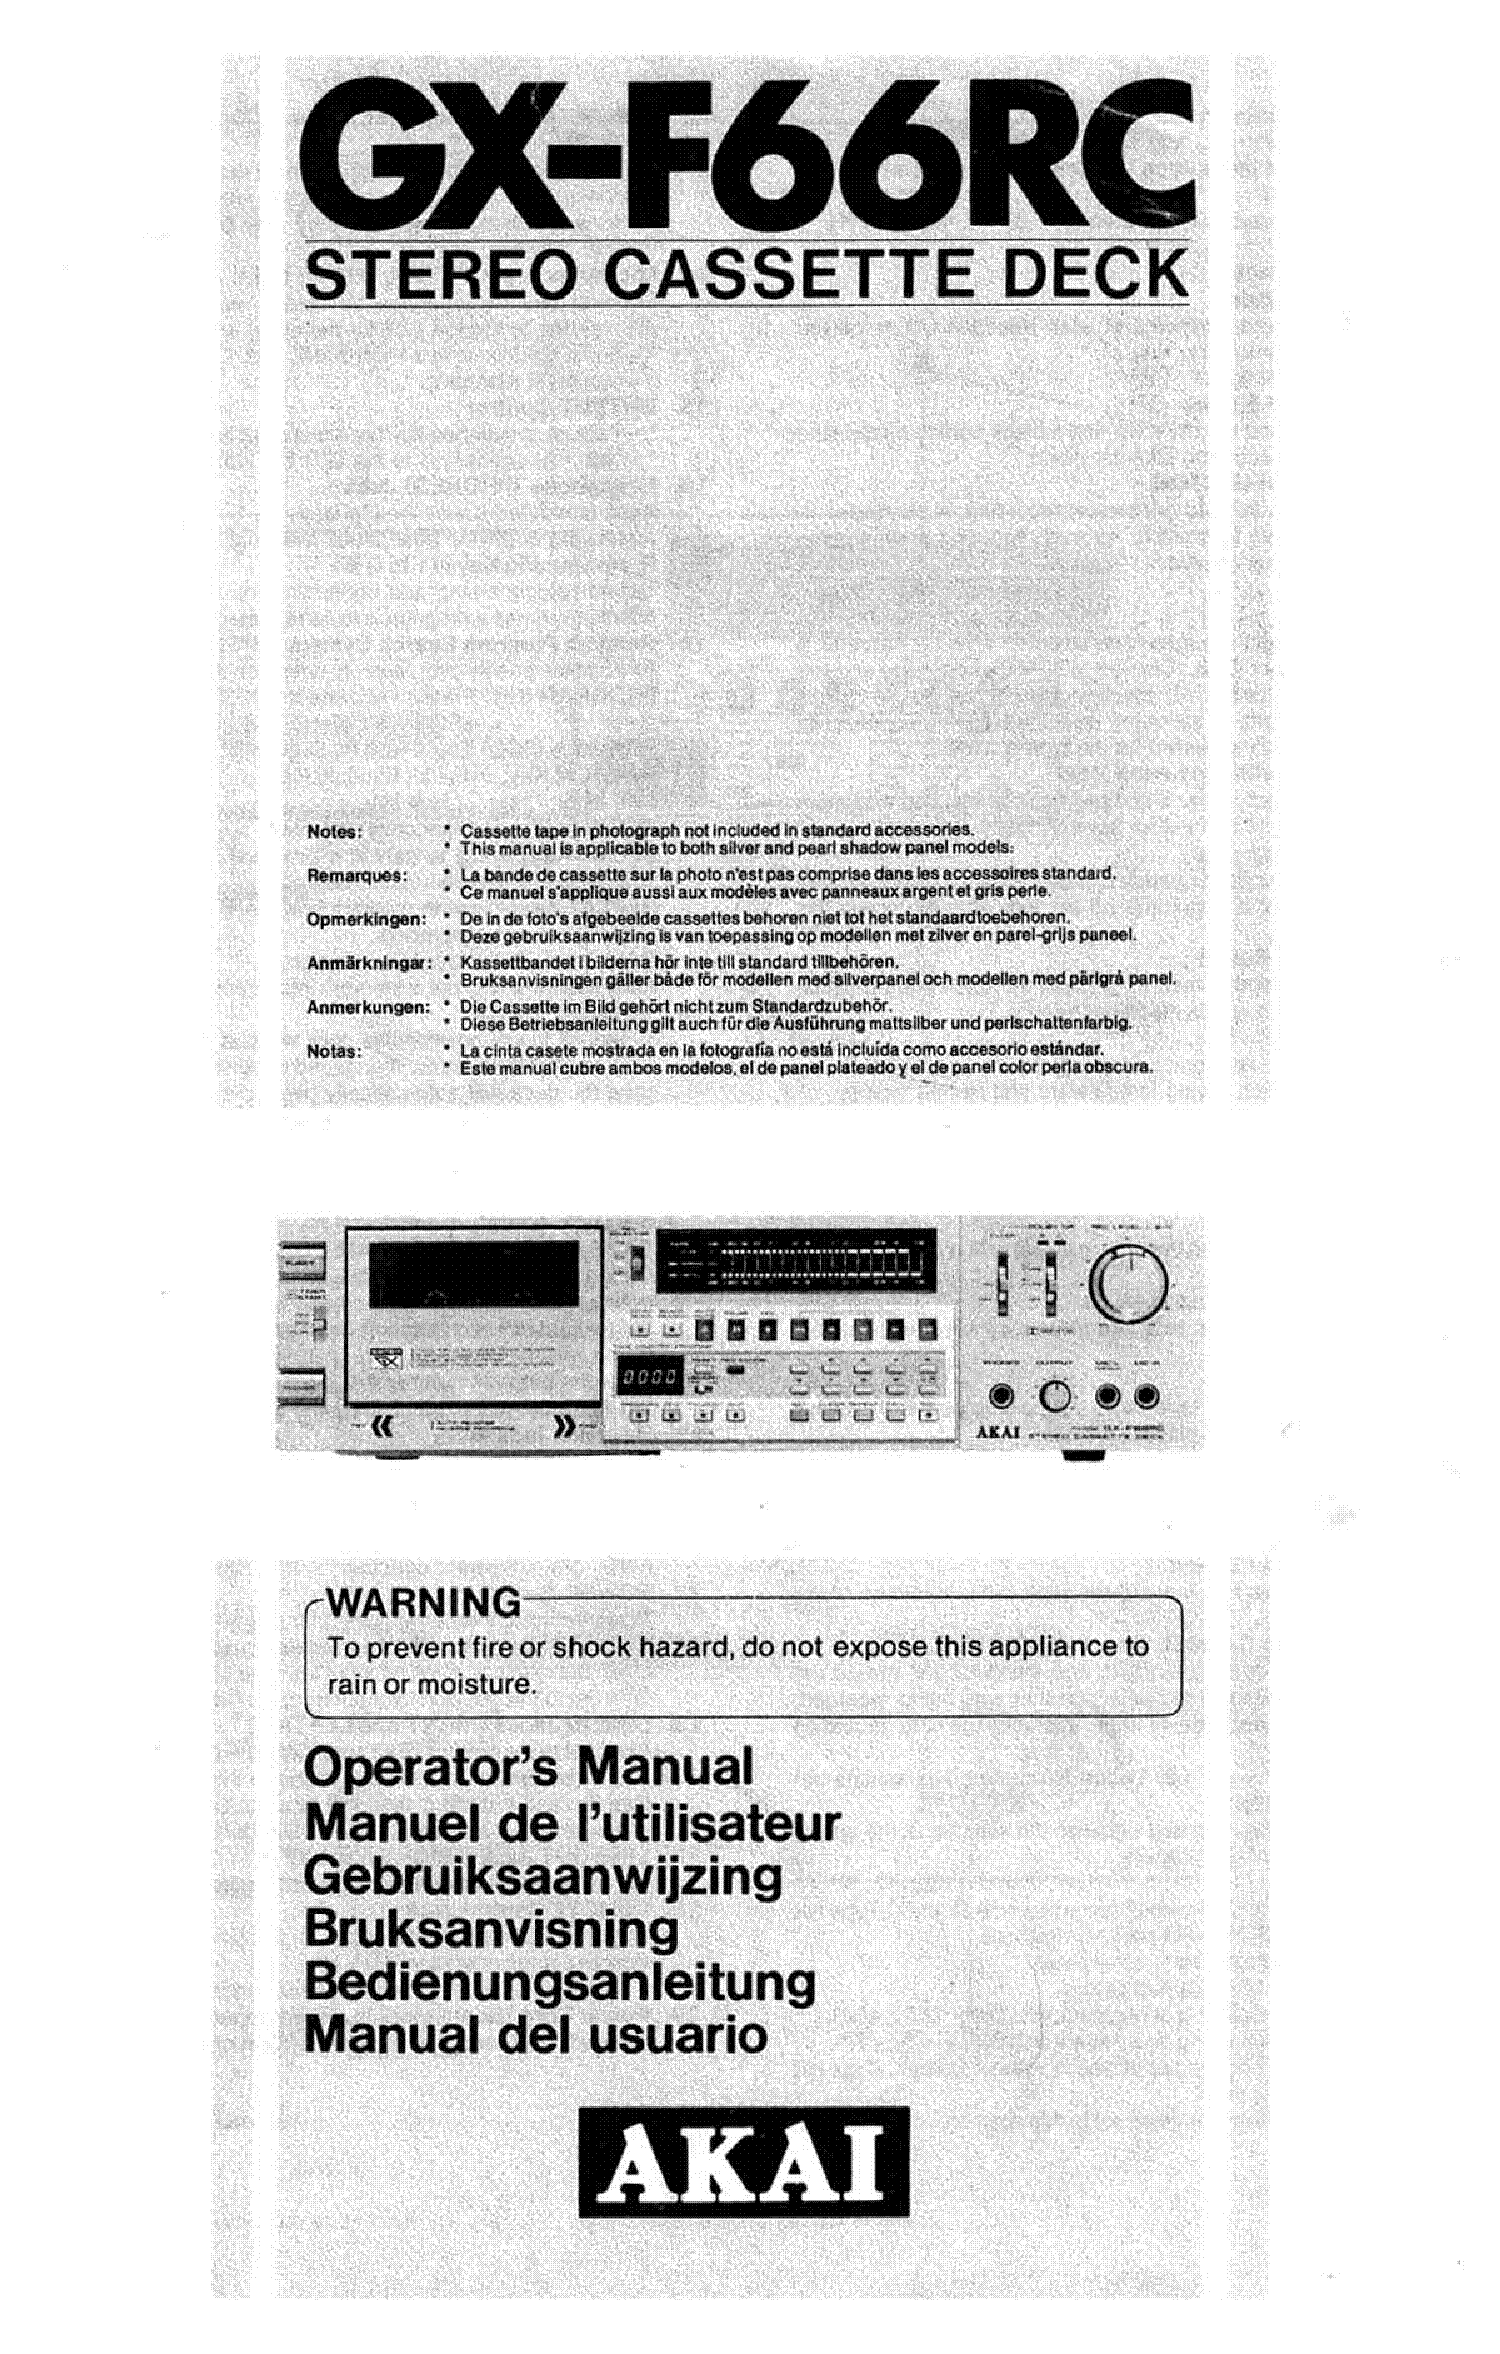 AKAI GX-F66RC SM NO-SCH service manual (2nd page)